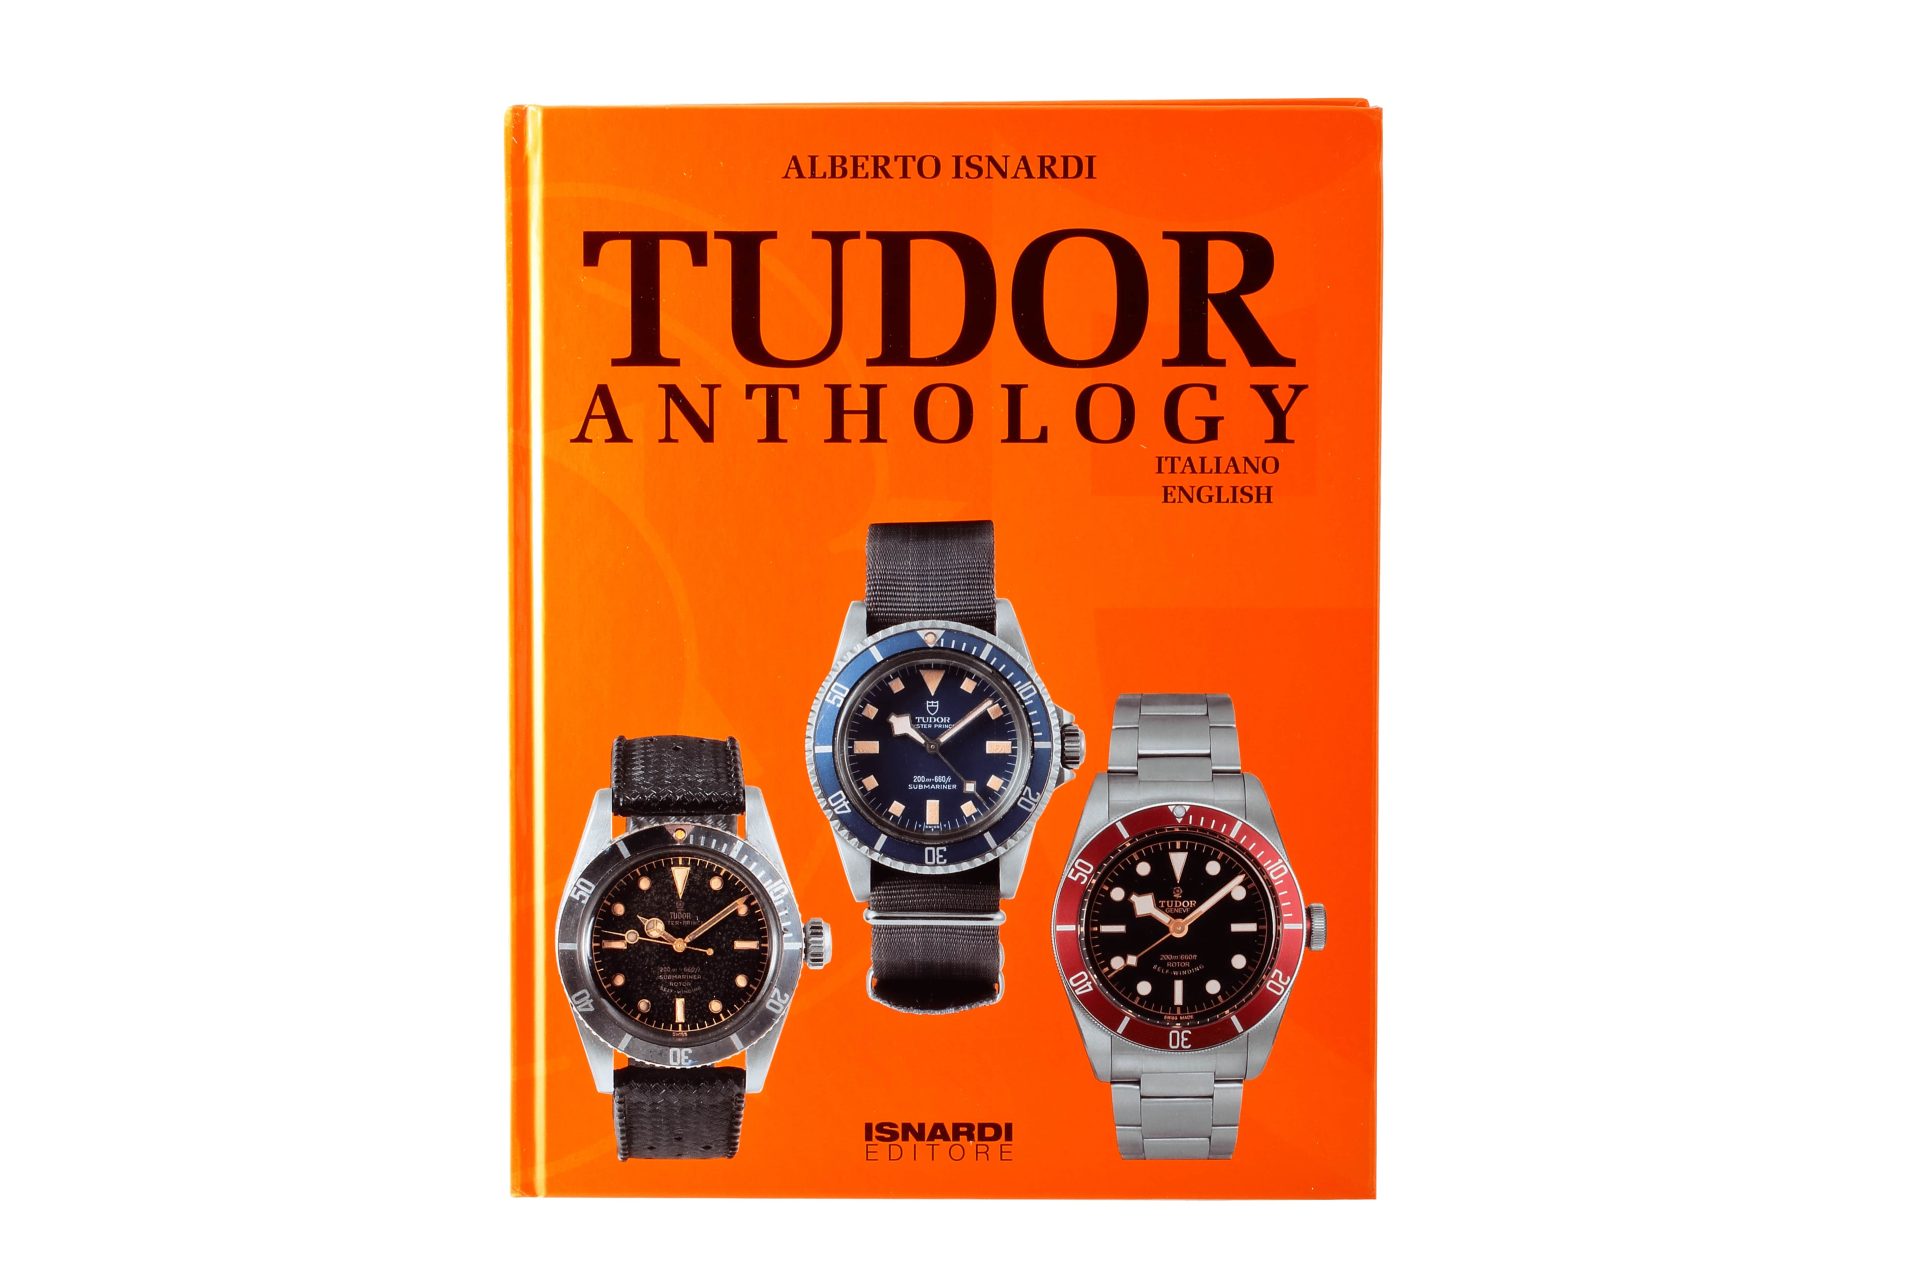 13141 Tudor Anthology Book by Alberto Isnardi - Rare Watch Parts